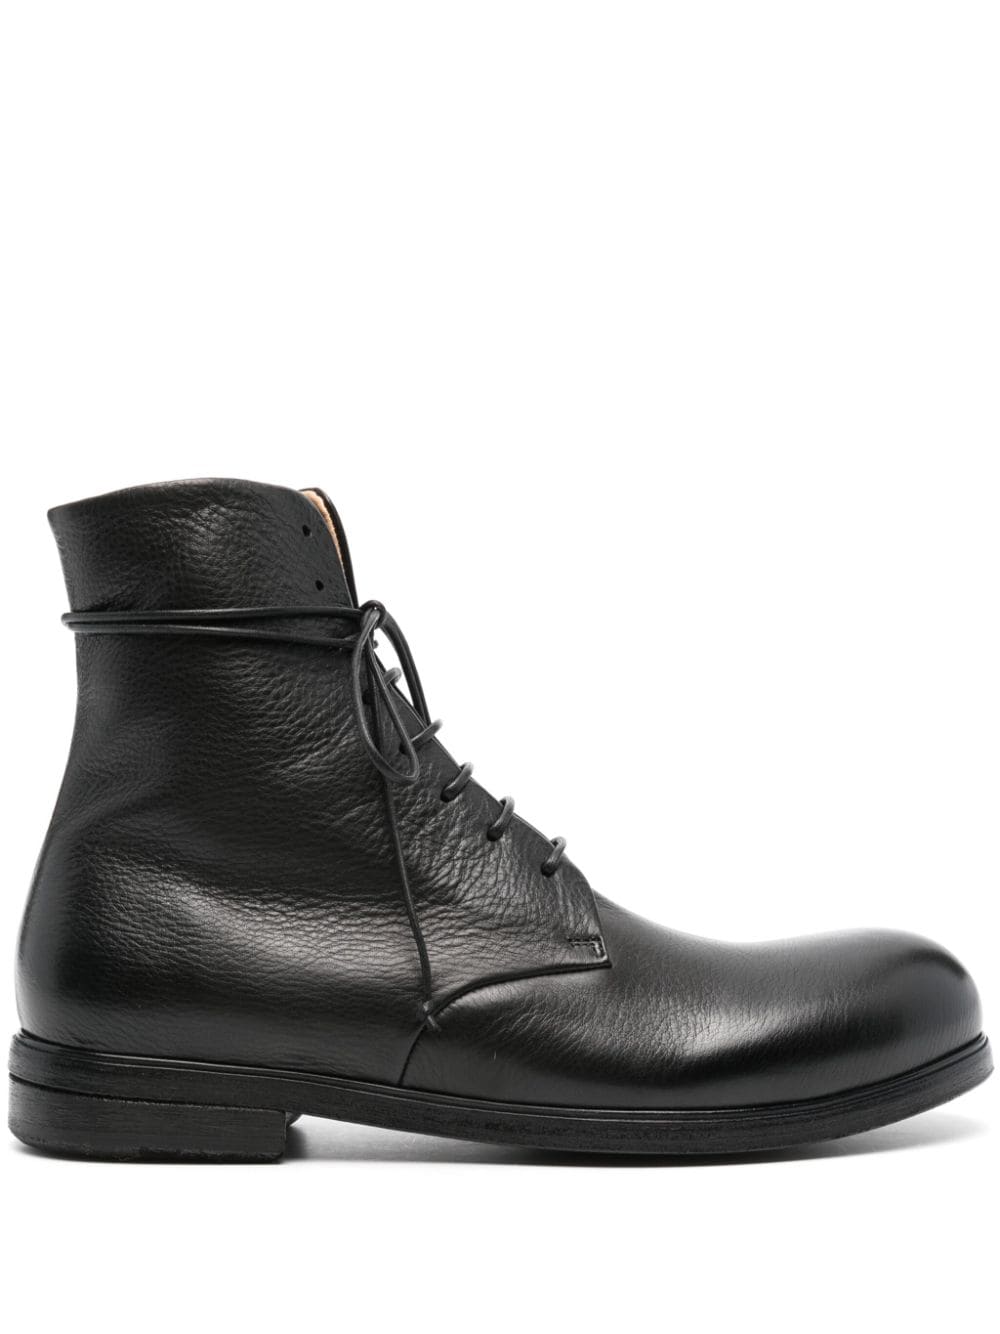 Marsèll leather ankle boots - Black von Marsèll